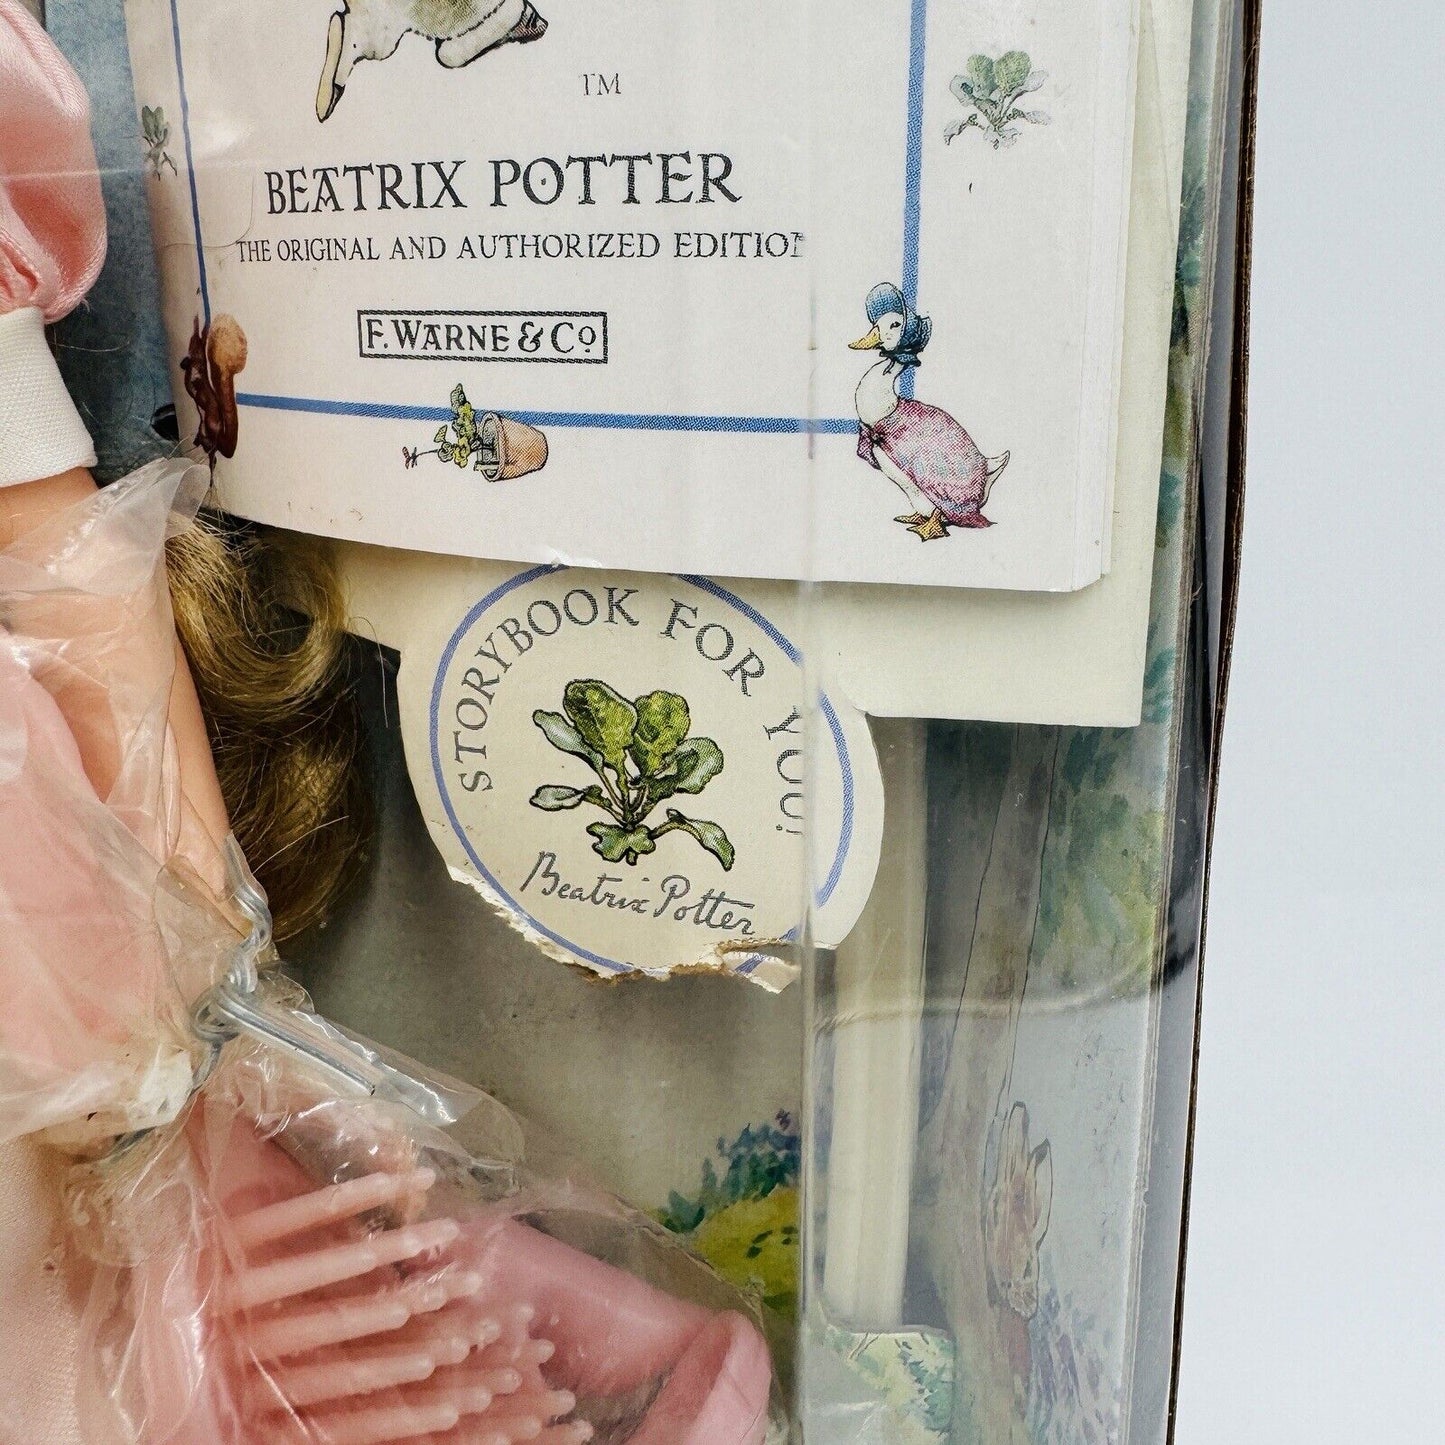 Vintage Barbie Doll 1997 Easter Bunny The Tale of Peter Rabbit Beatrix Potter